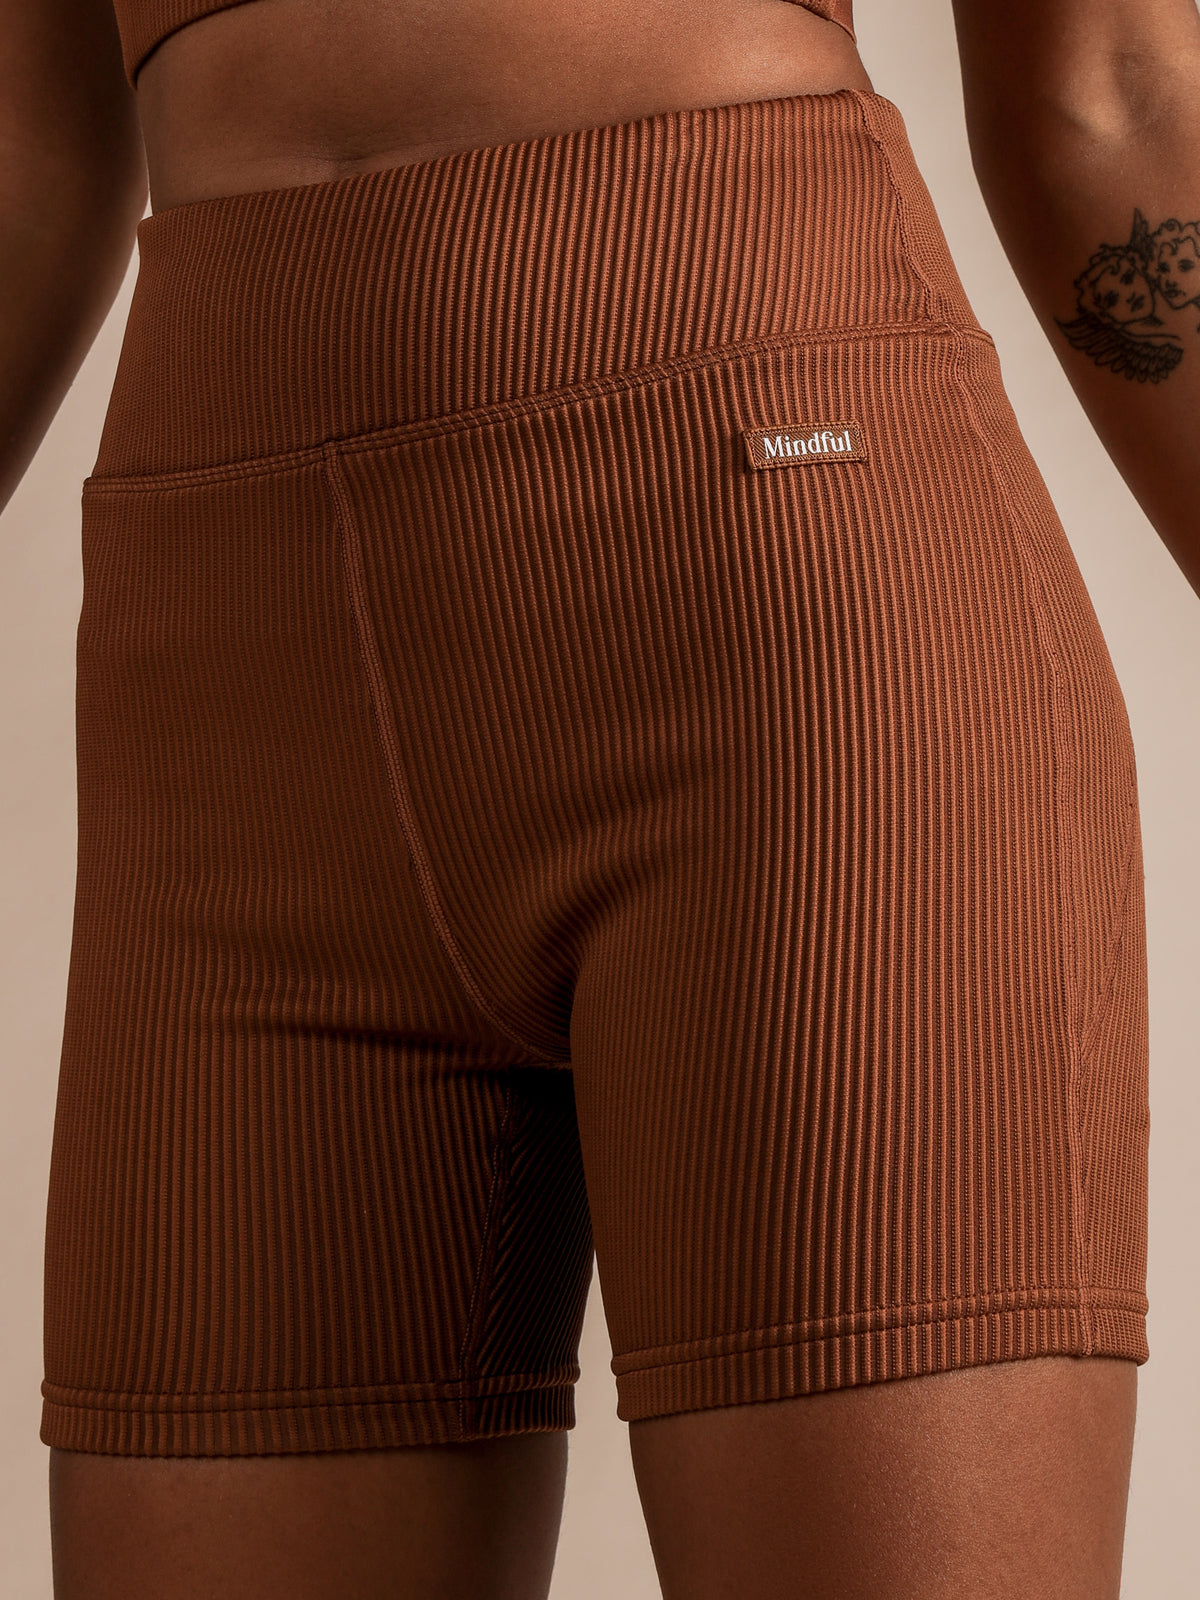 Ribbed Comfort Bike Shorts in Brown